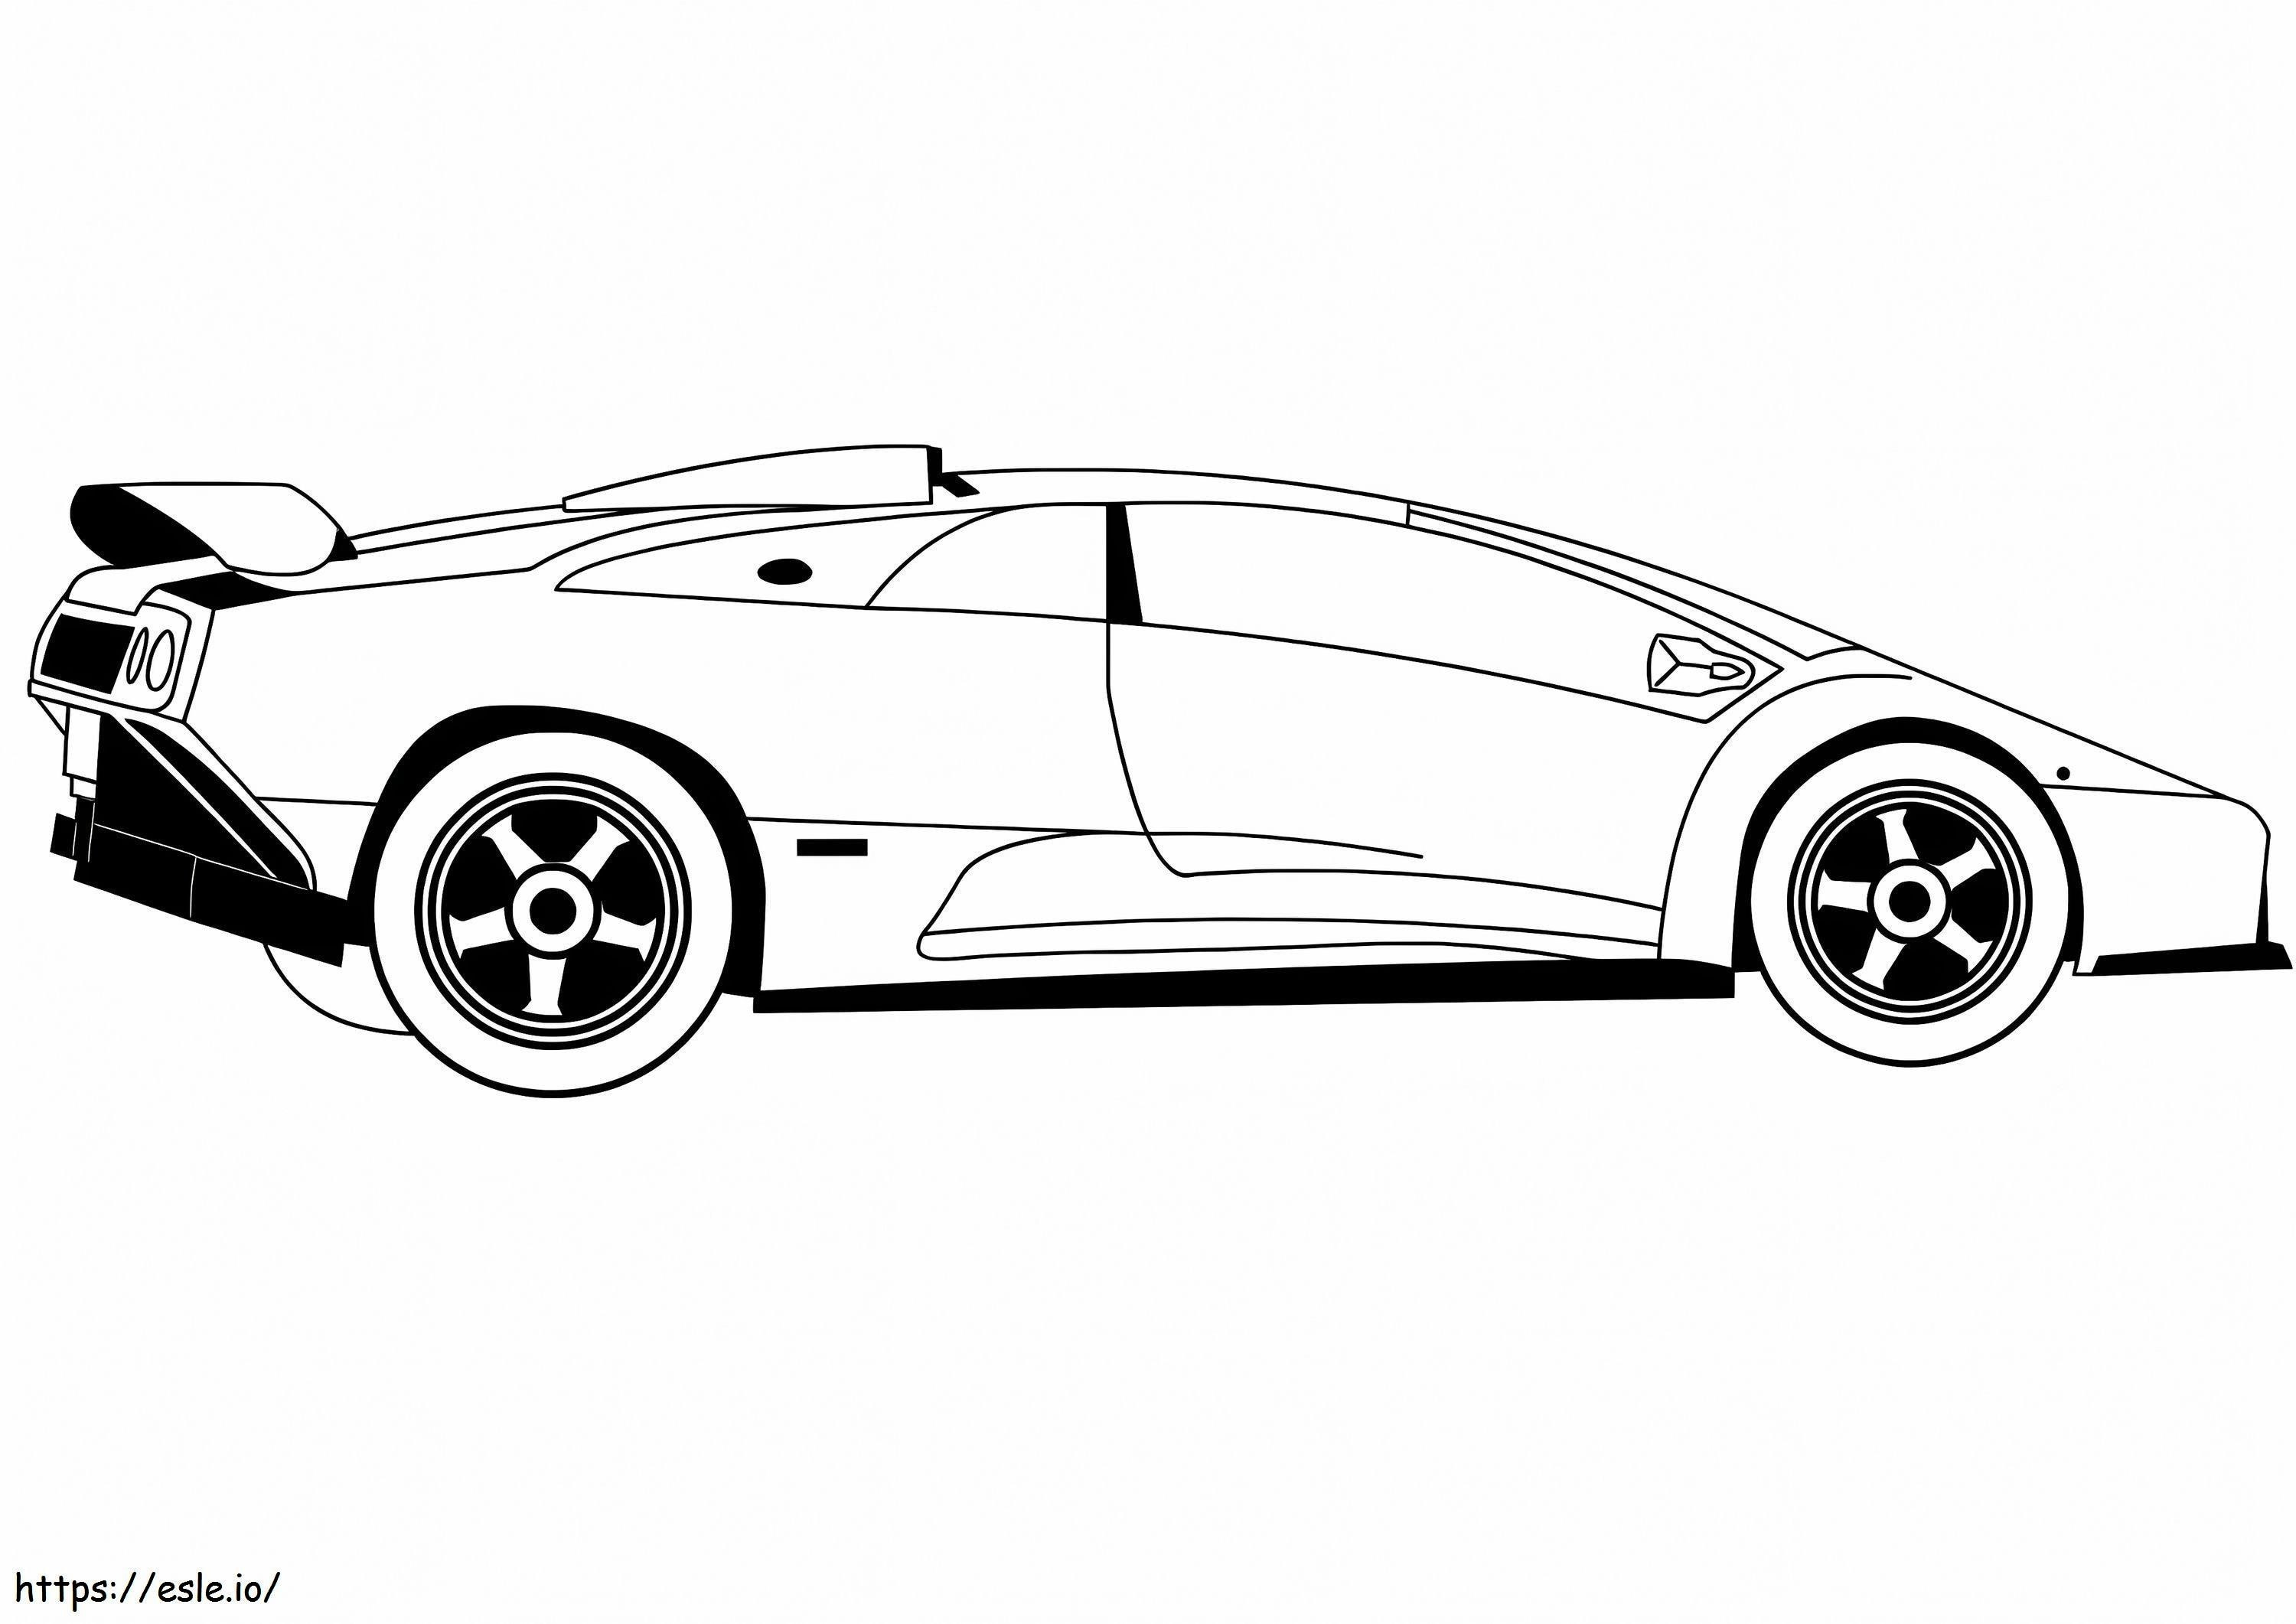 Lamborghini 15 para colorir